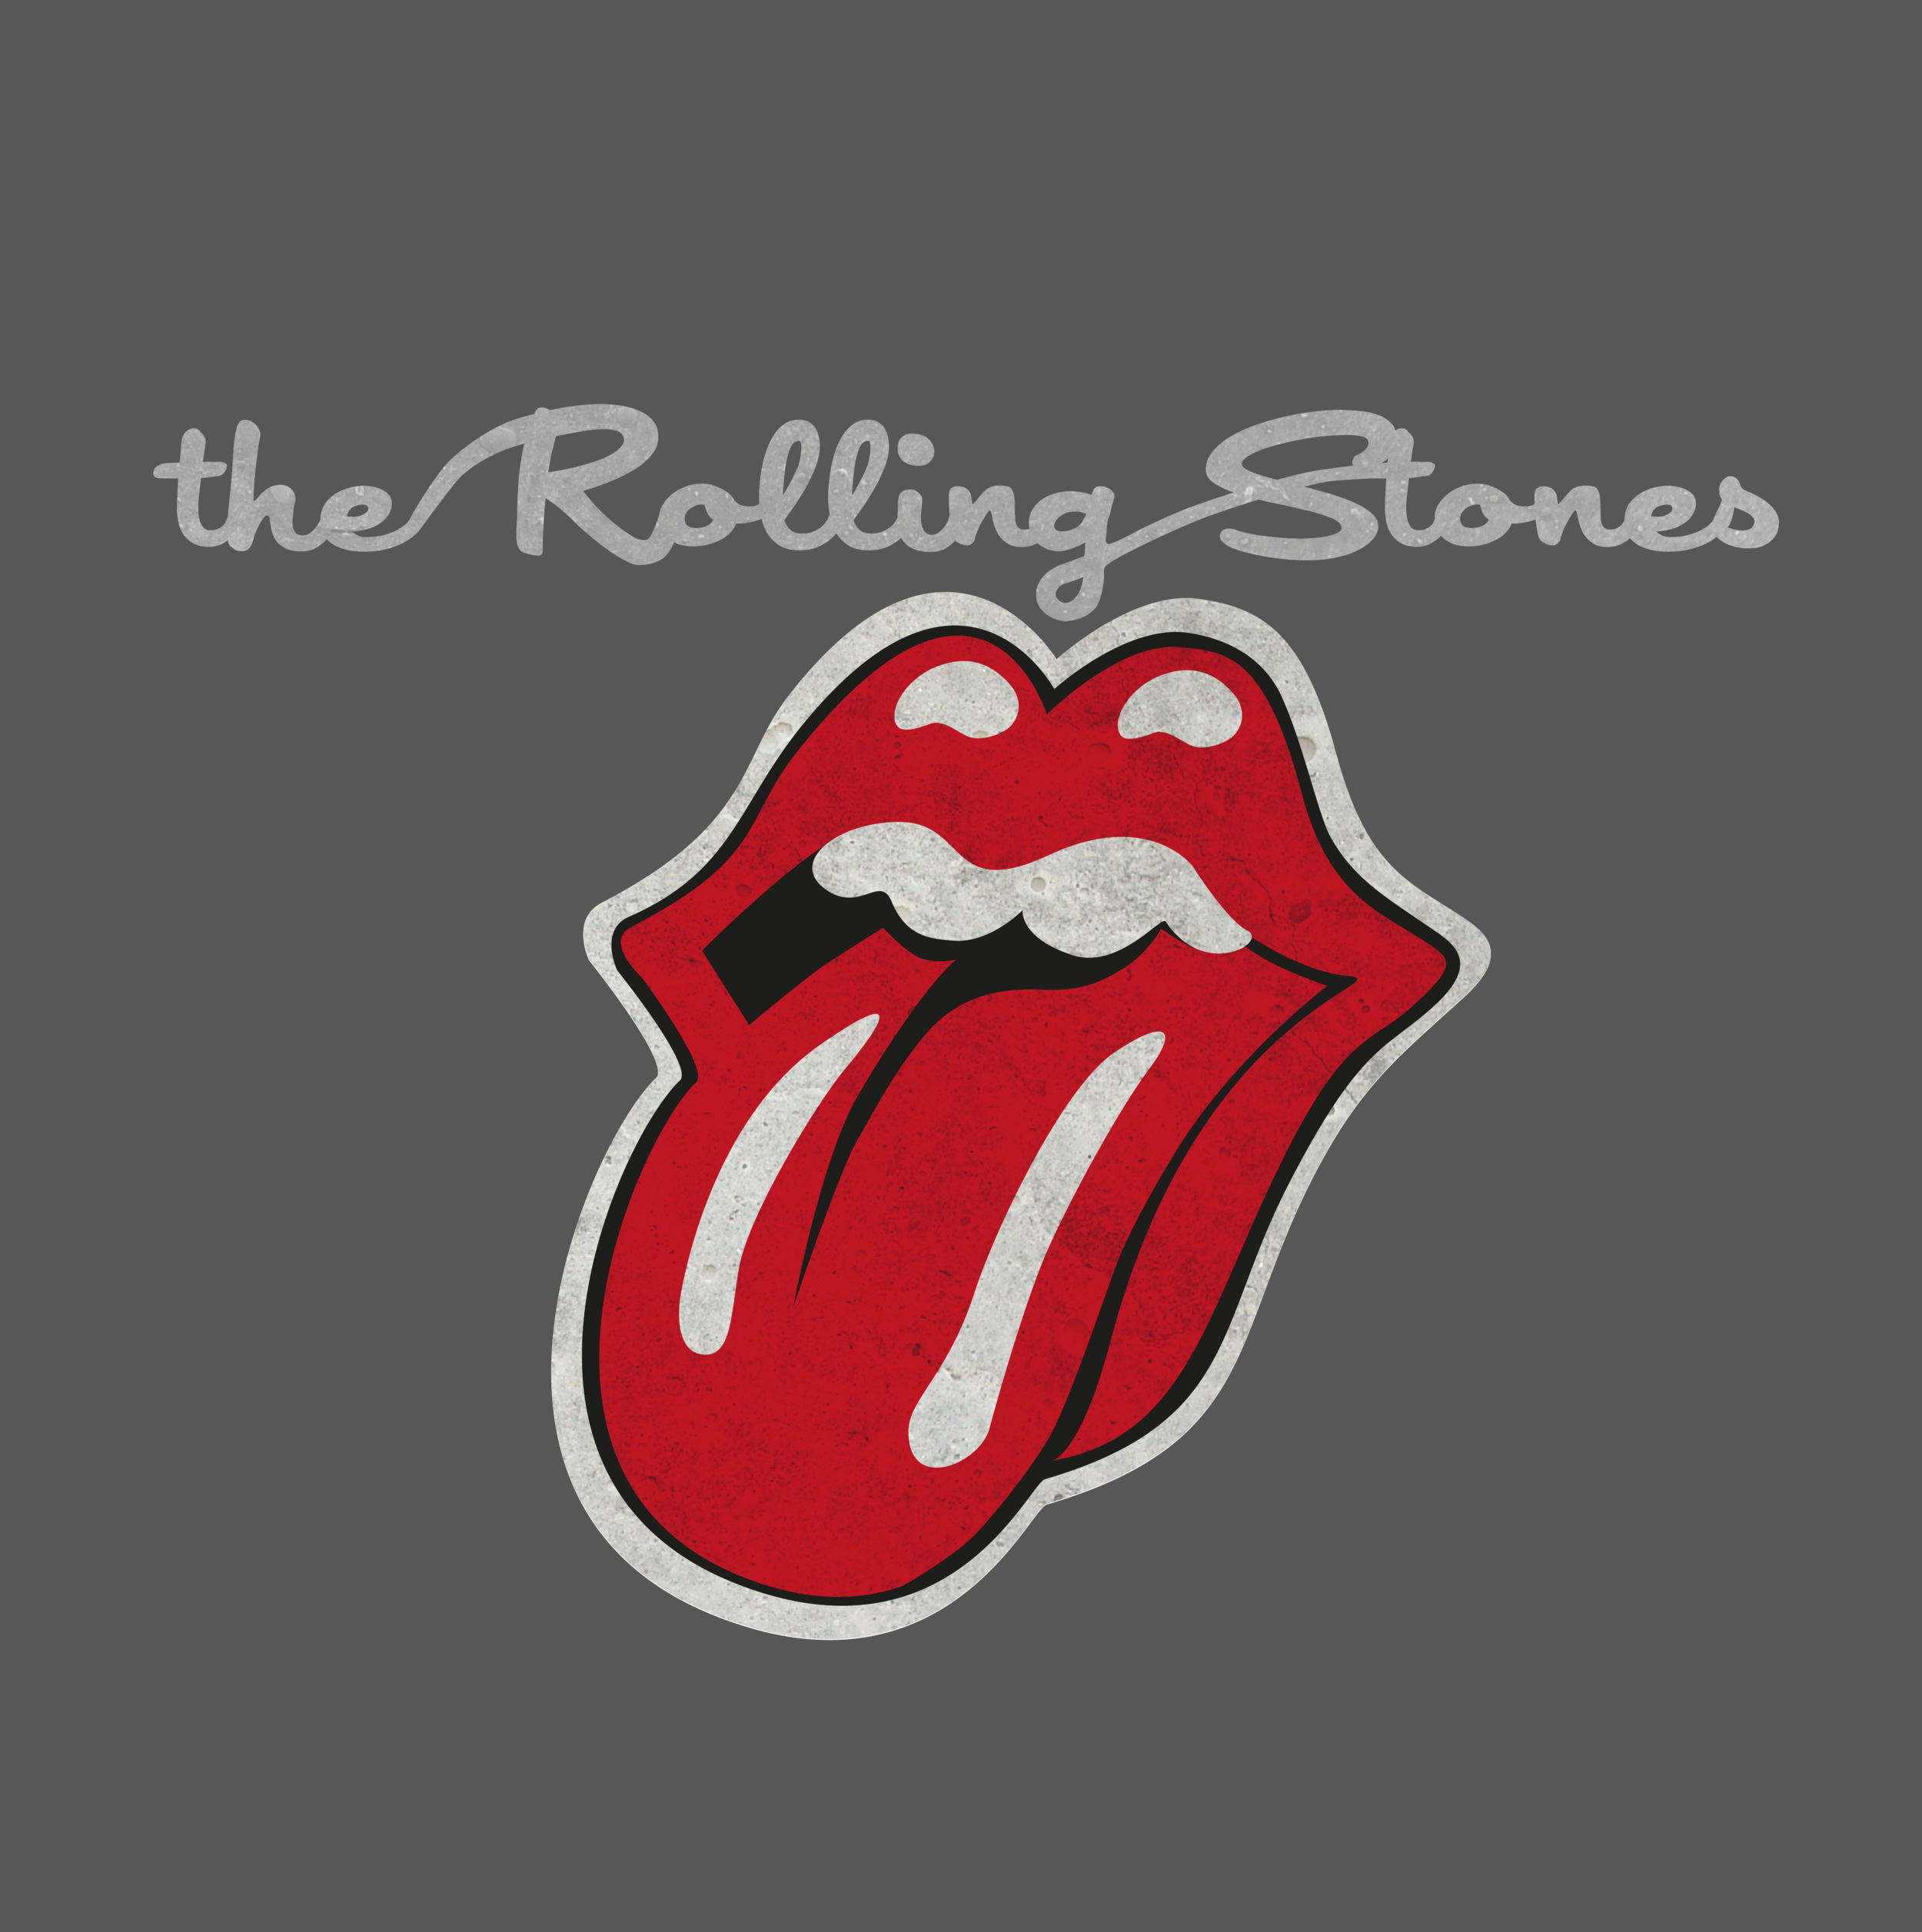 the_rolling_stones_by_pmattiasp-d5rnqf0.png